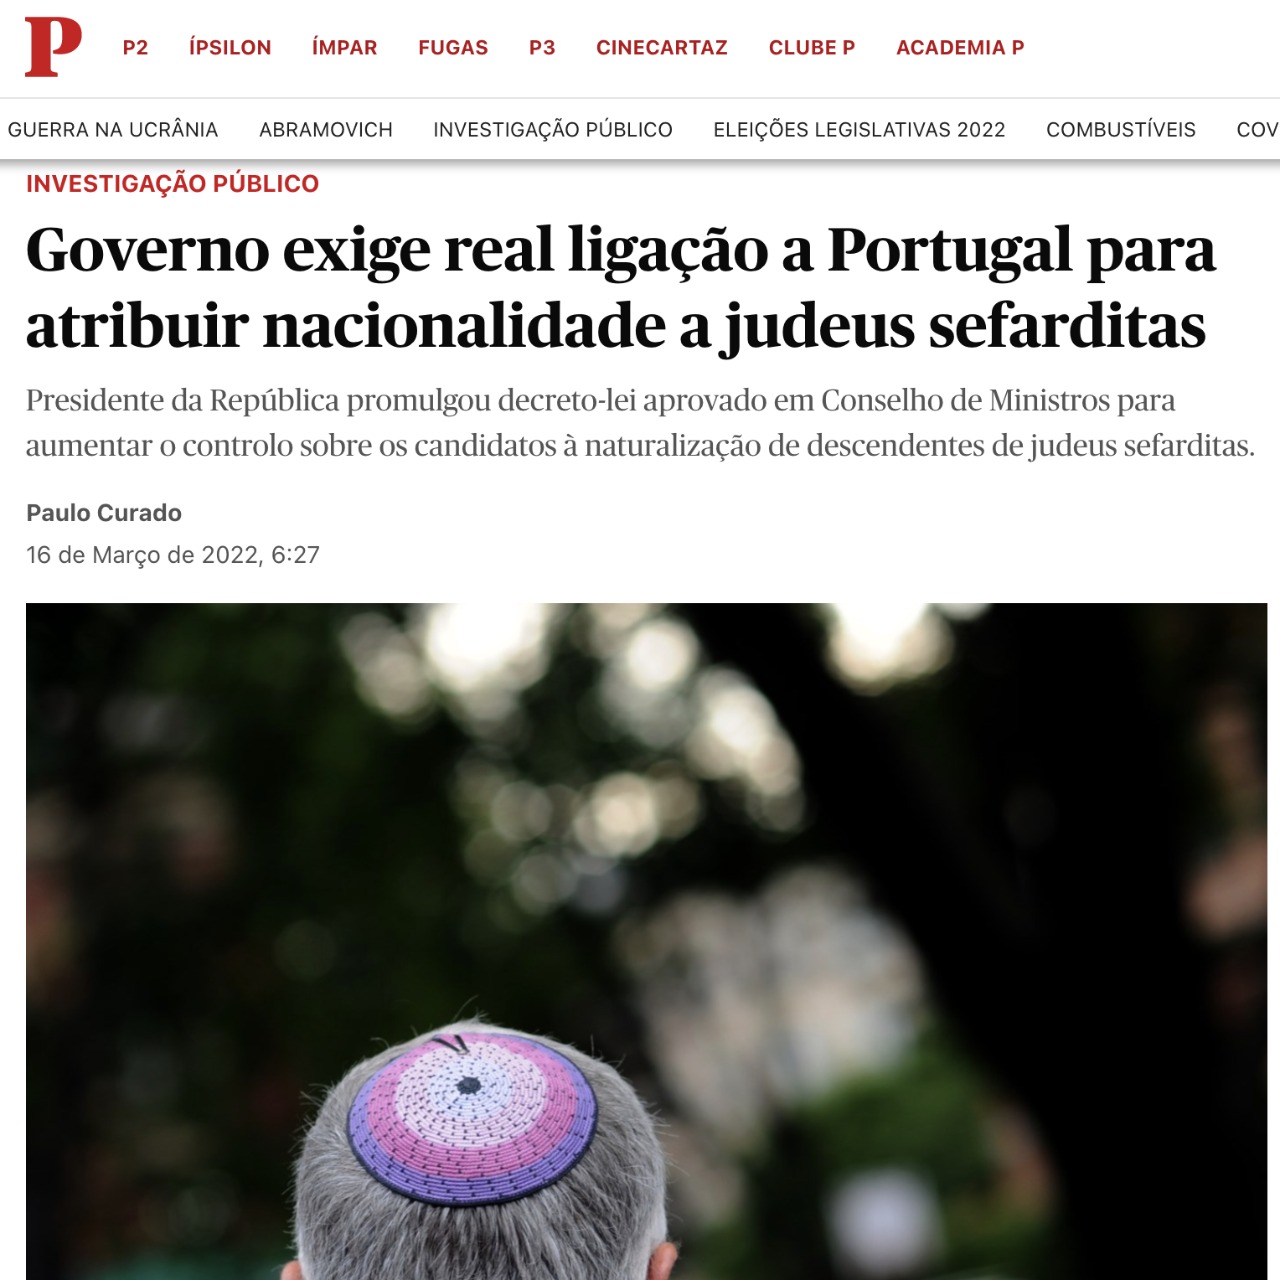 tomado de: https://www.publico.pt/2022/03/16/desporto/noticia/governo-exige-real-ligacao-portugal-atribuir-nacionalidade-judeus-sefarditas-1998932#&gid=1&pid=1